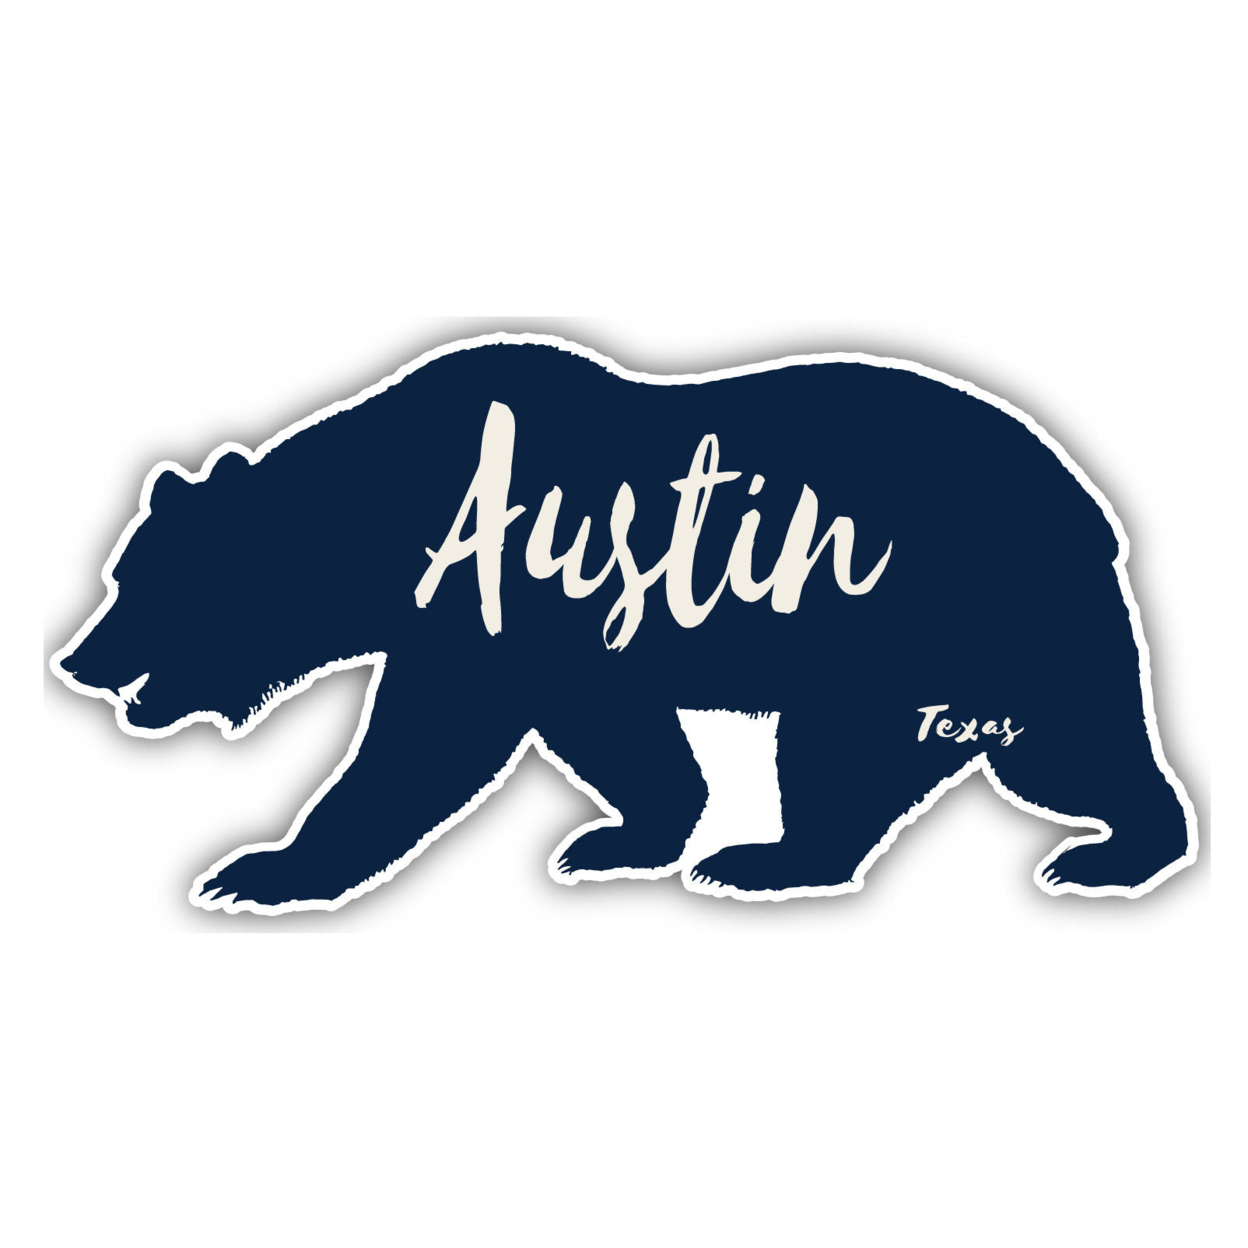 Austin Texas Souvenir Decorative Stickers (Choose Theme And Size) - 4-Pack, 2-Inch, Bear